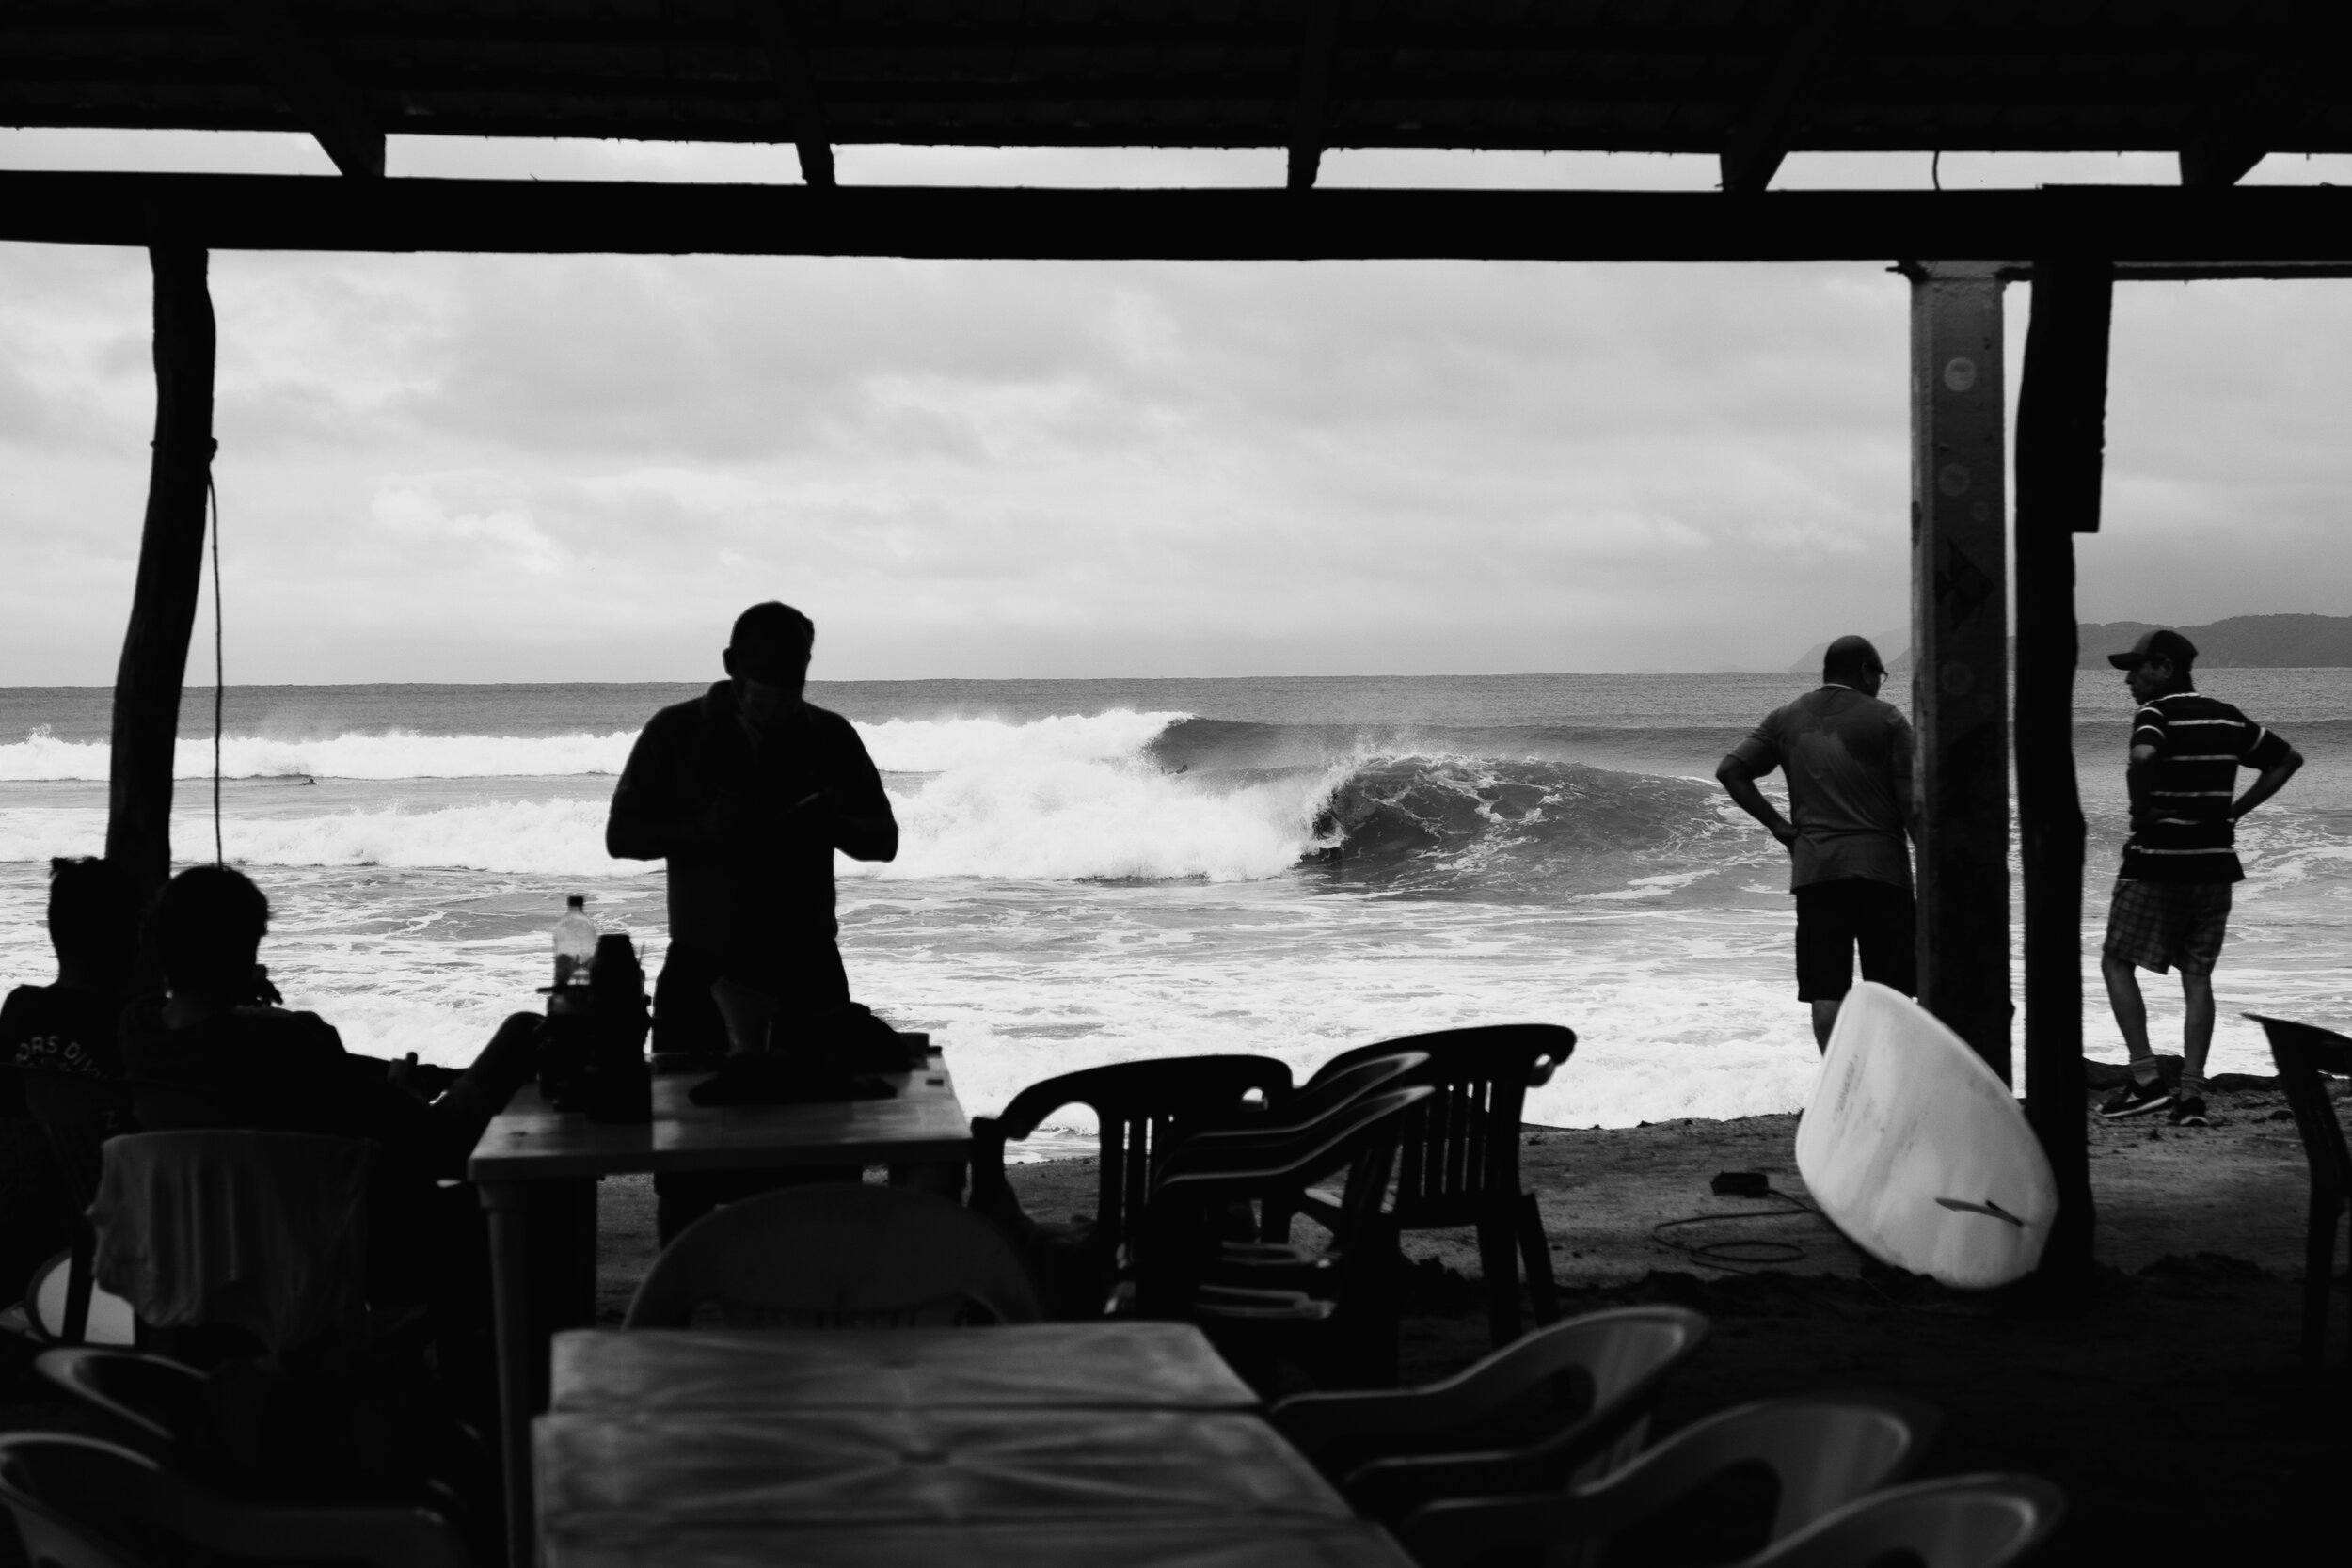 heiko-bothe-surf-photography-fotografia-ixtapa-zihuatanejo-mexico-4.jpg